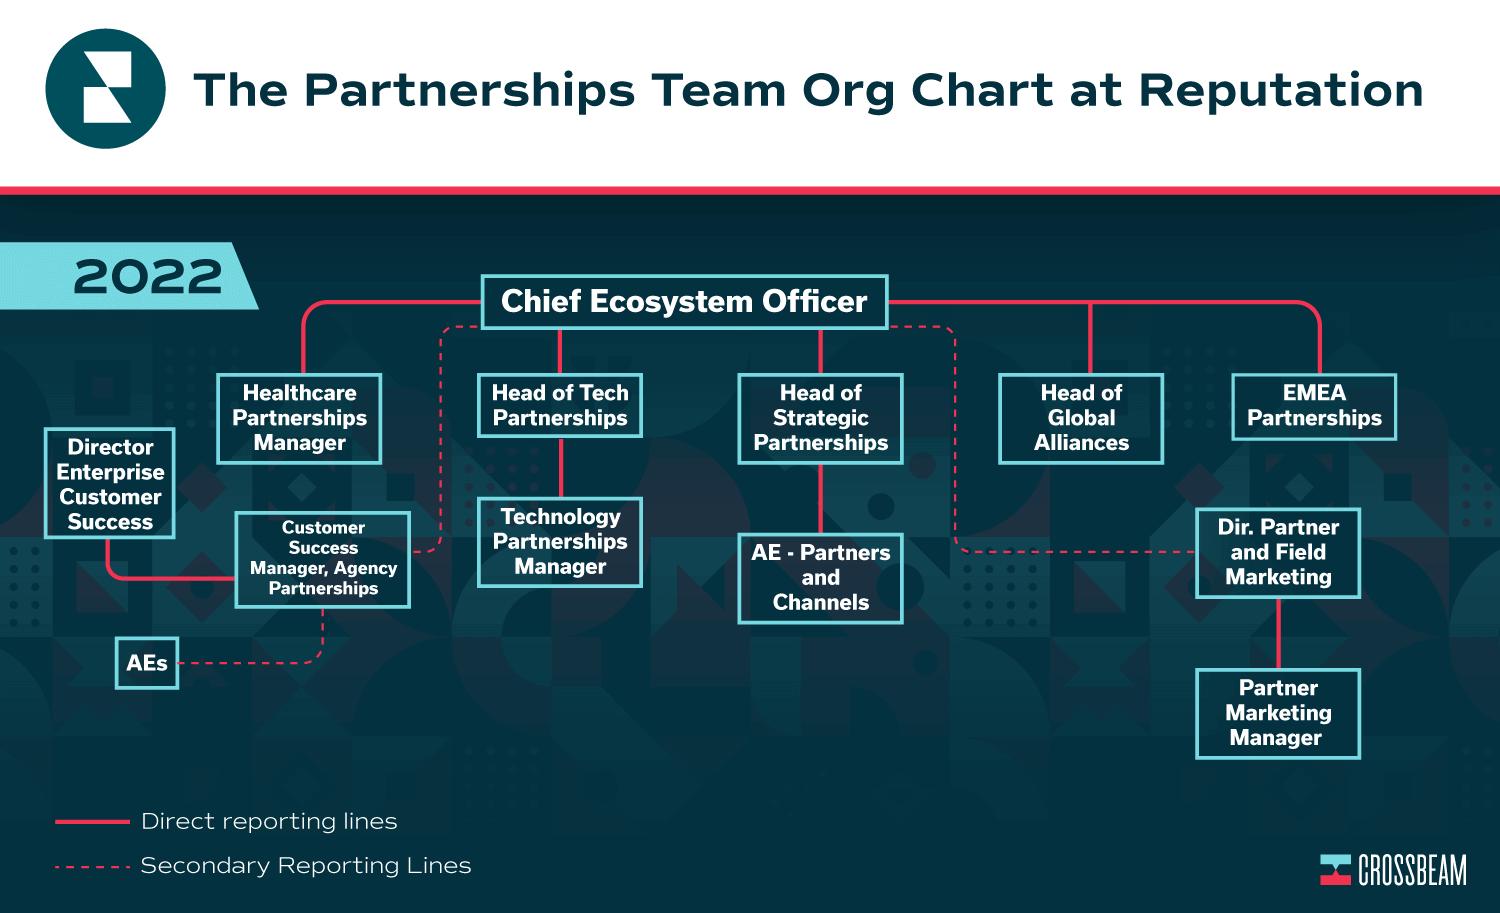 crossbeam-reputation-org-chart-partnerships